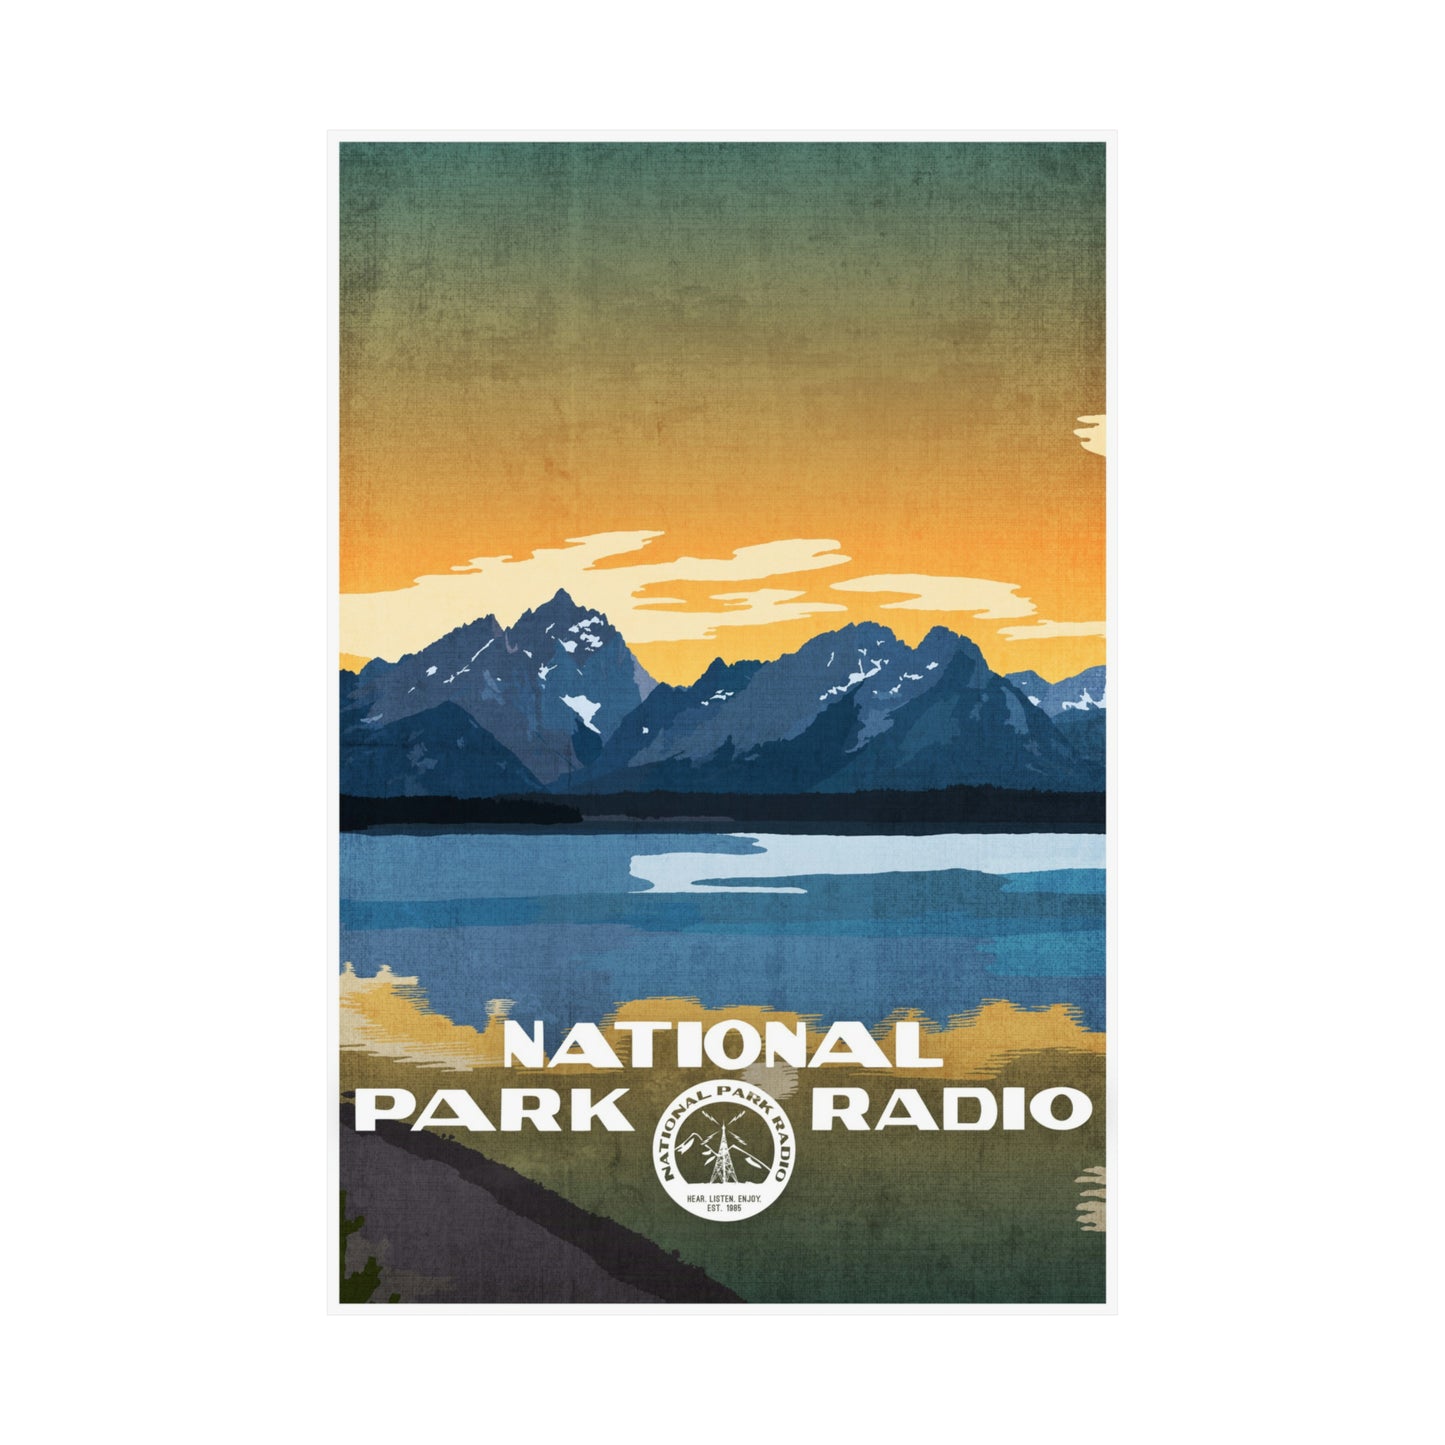 *Vintage* National Park Radio Poster - "The Great Divide"